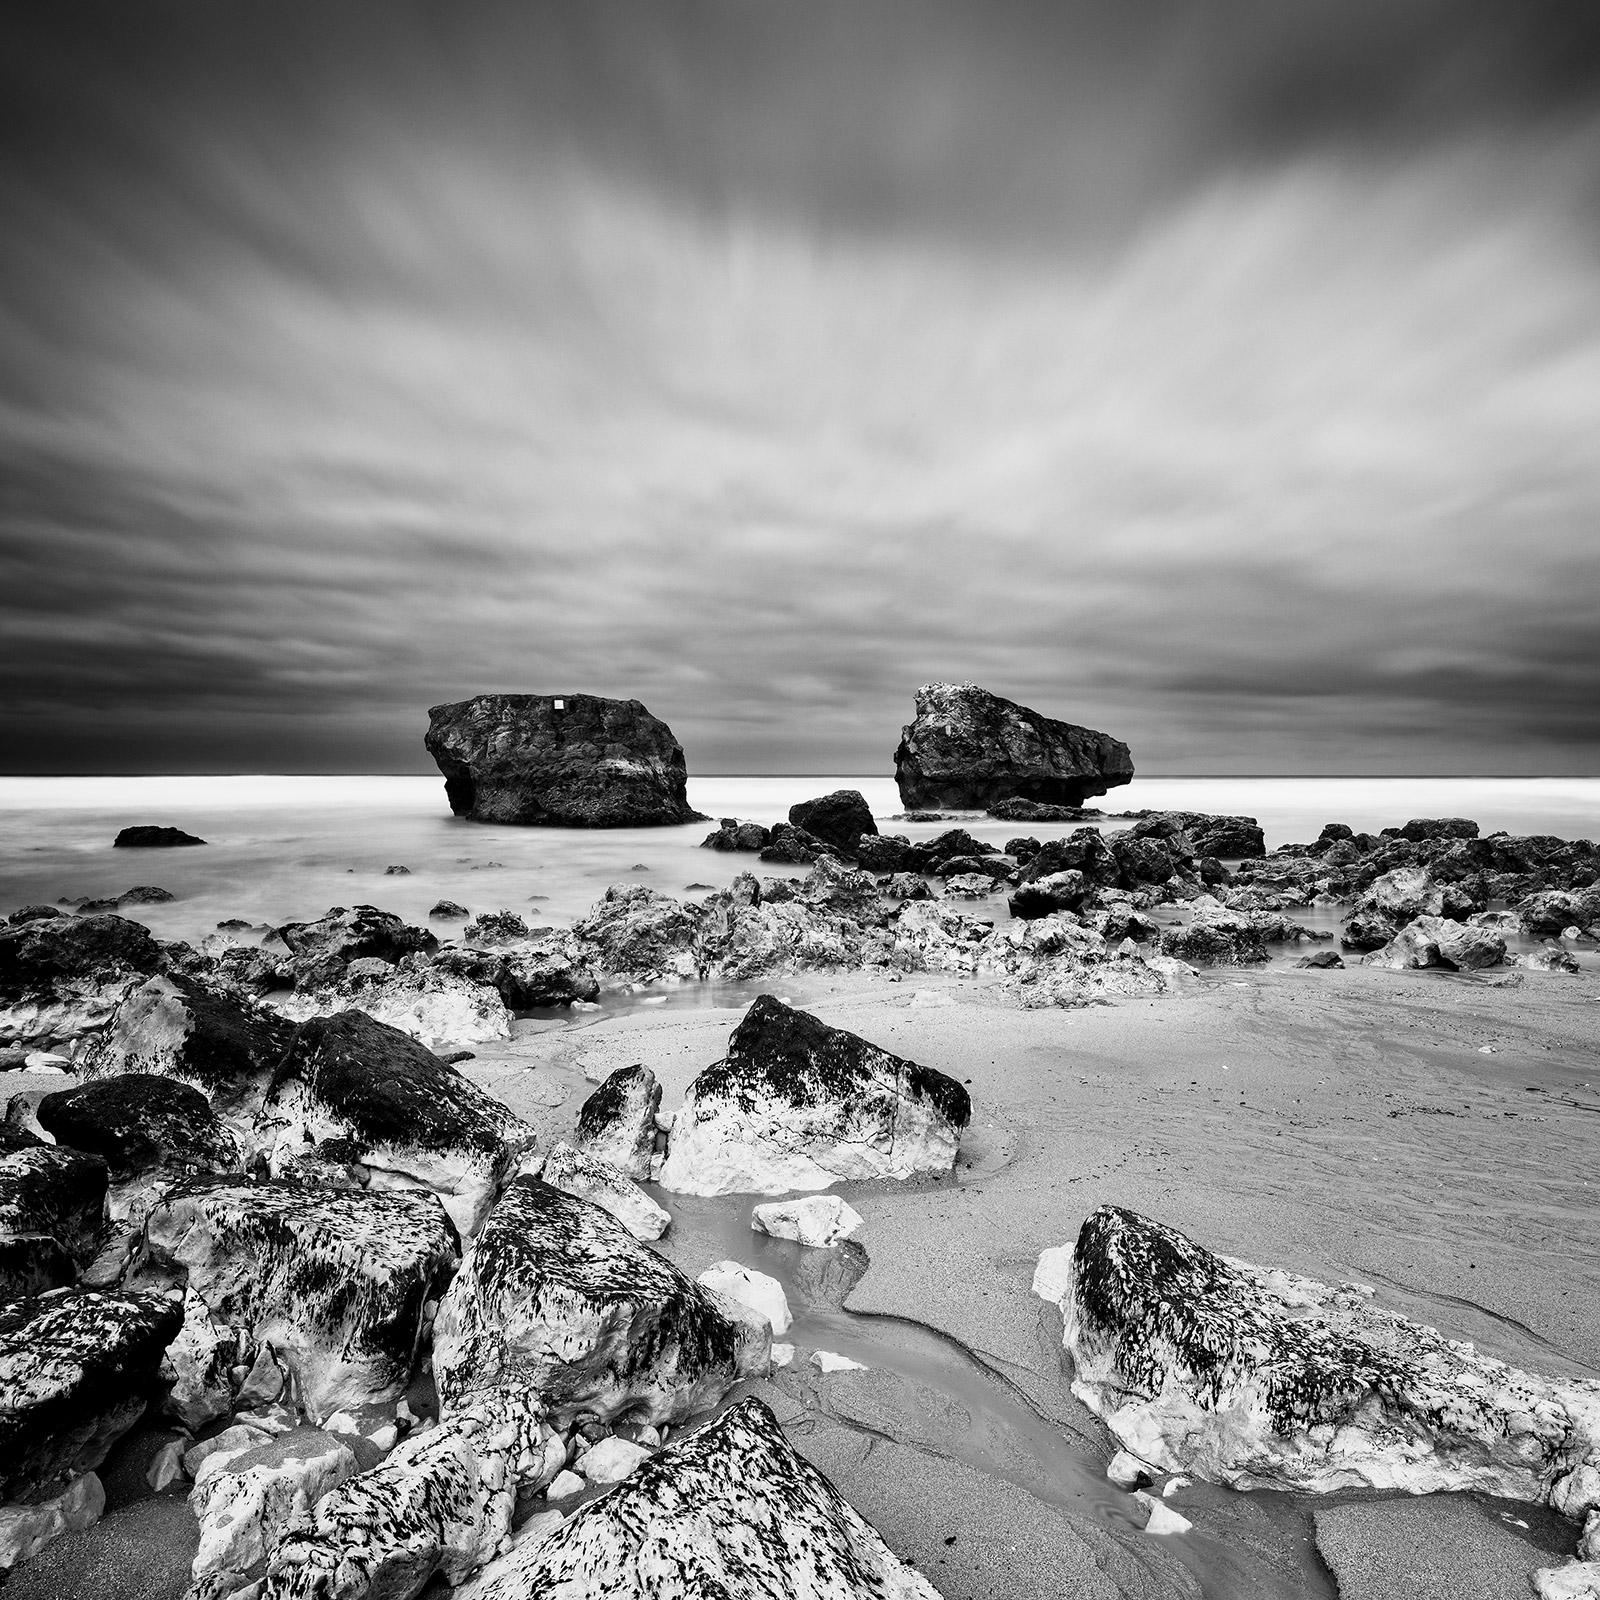 Gerald Berghammer Landscape Photograph - Point de vue, rocky beach, stormy, France, black and white landscape photography